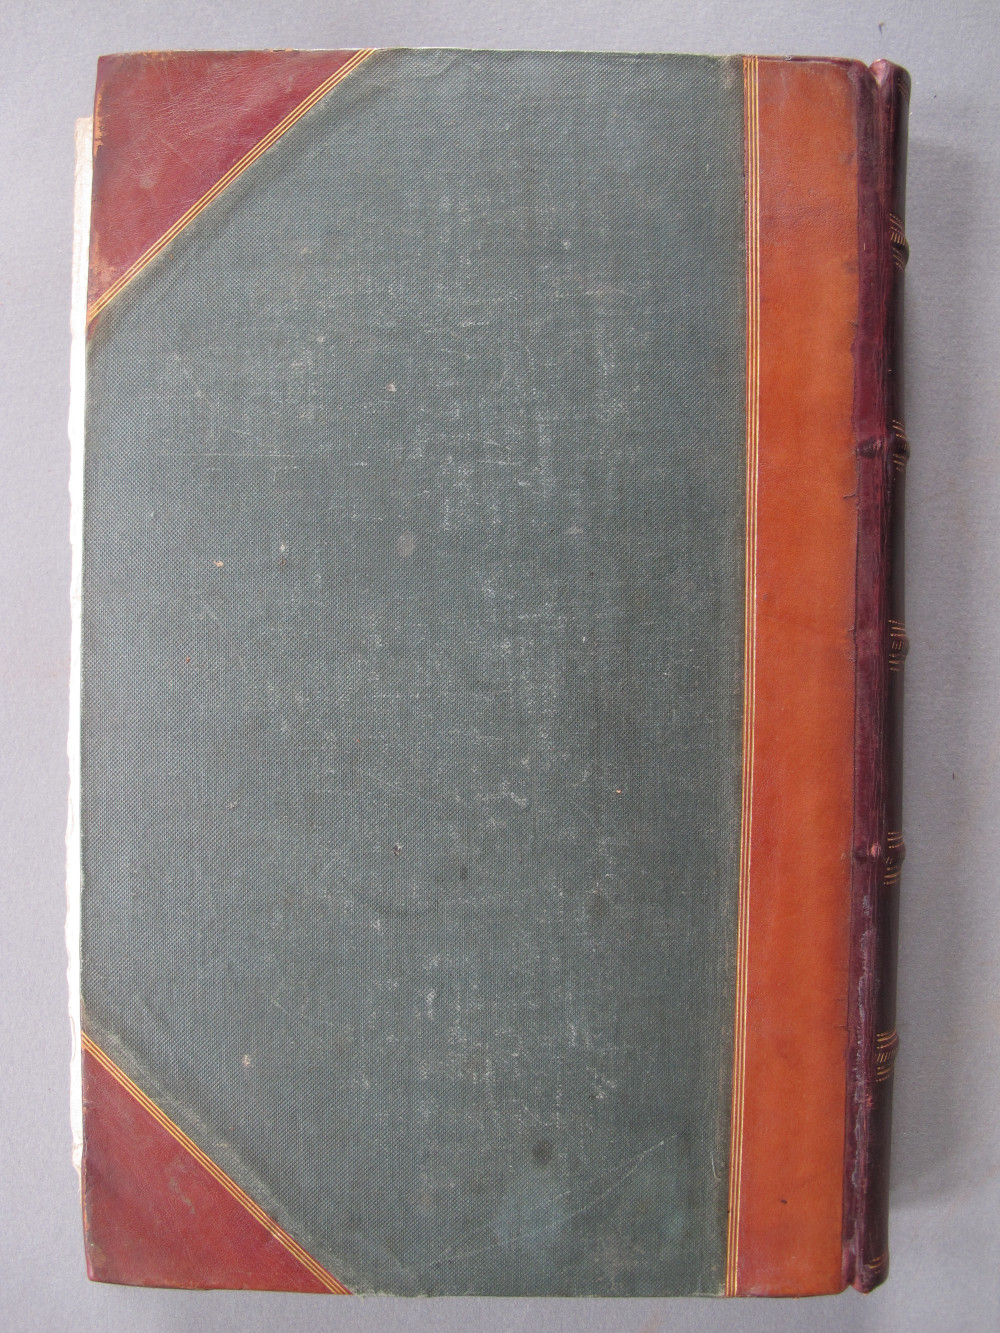 Folio 252 verso